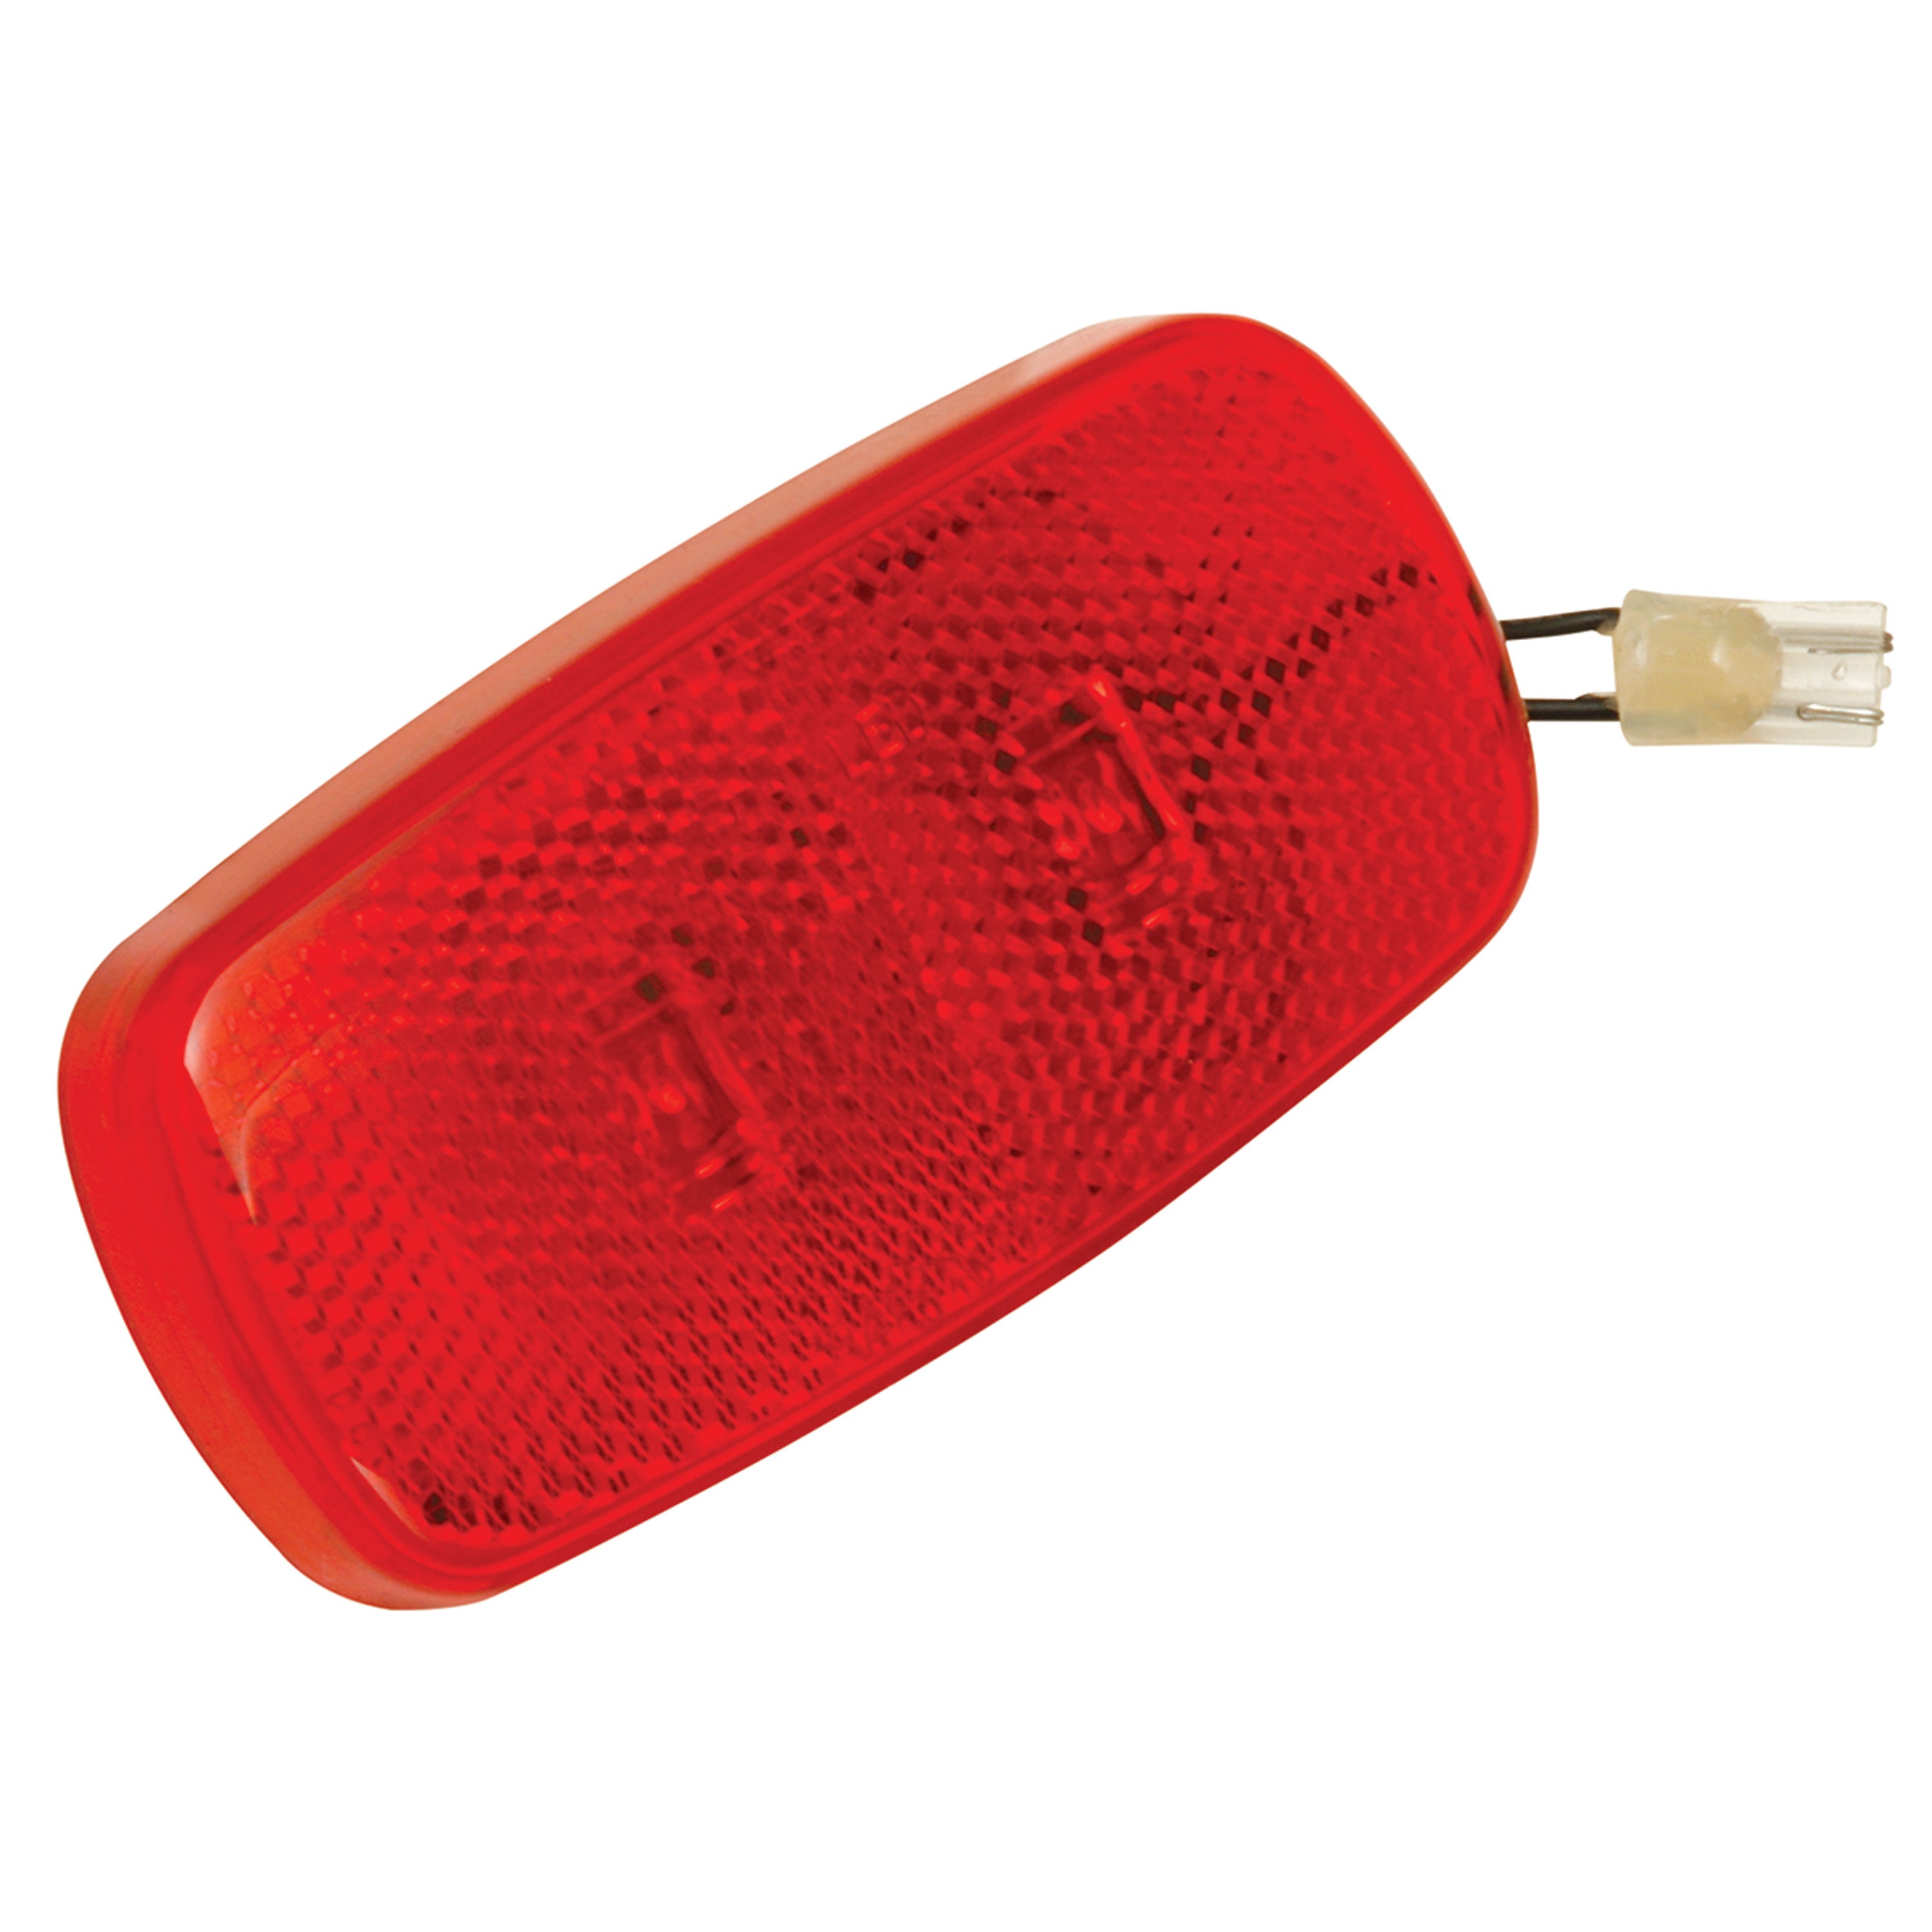 Bargman 42-59-410 Clearance Light #59 LED Upgrade Kit - Red